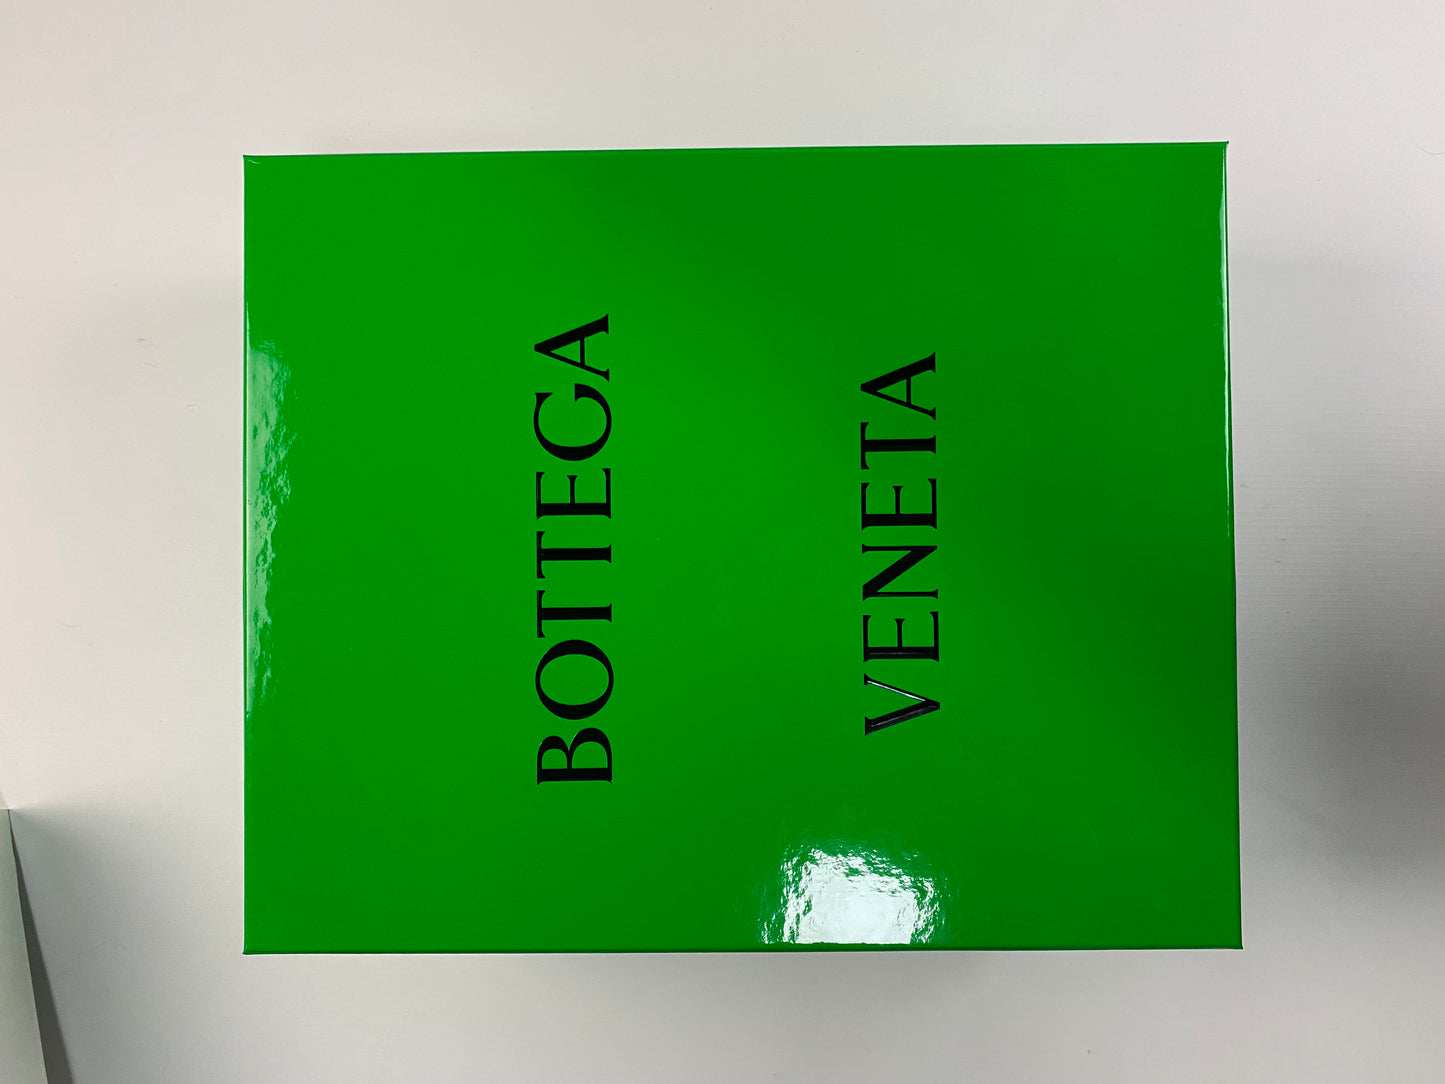 Bottega Veneta by Daniel lee puddle boots in kiwi green SZ: 8/41